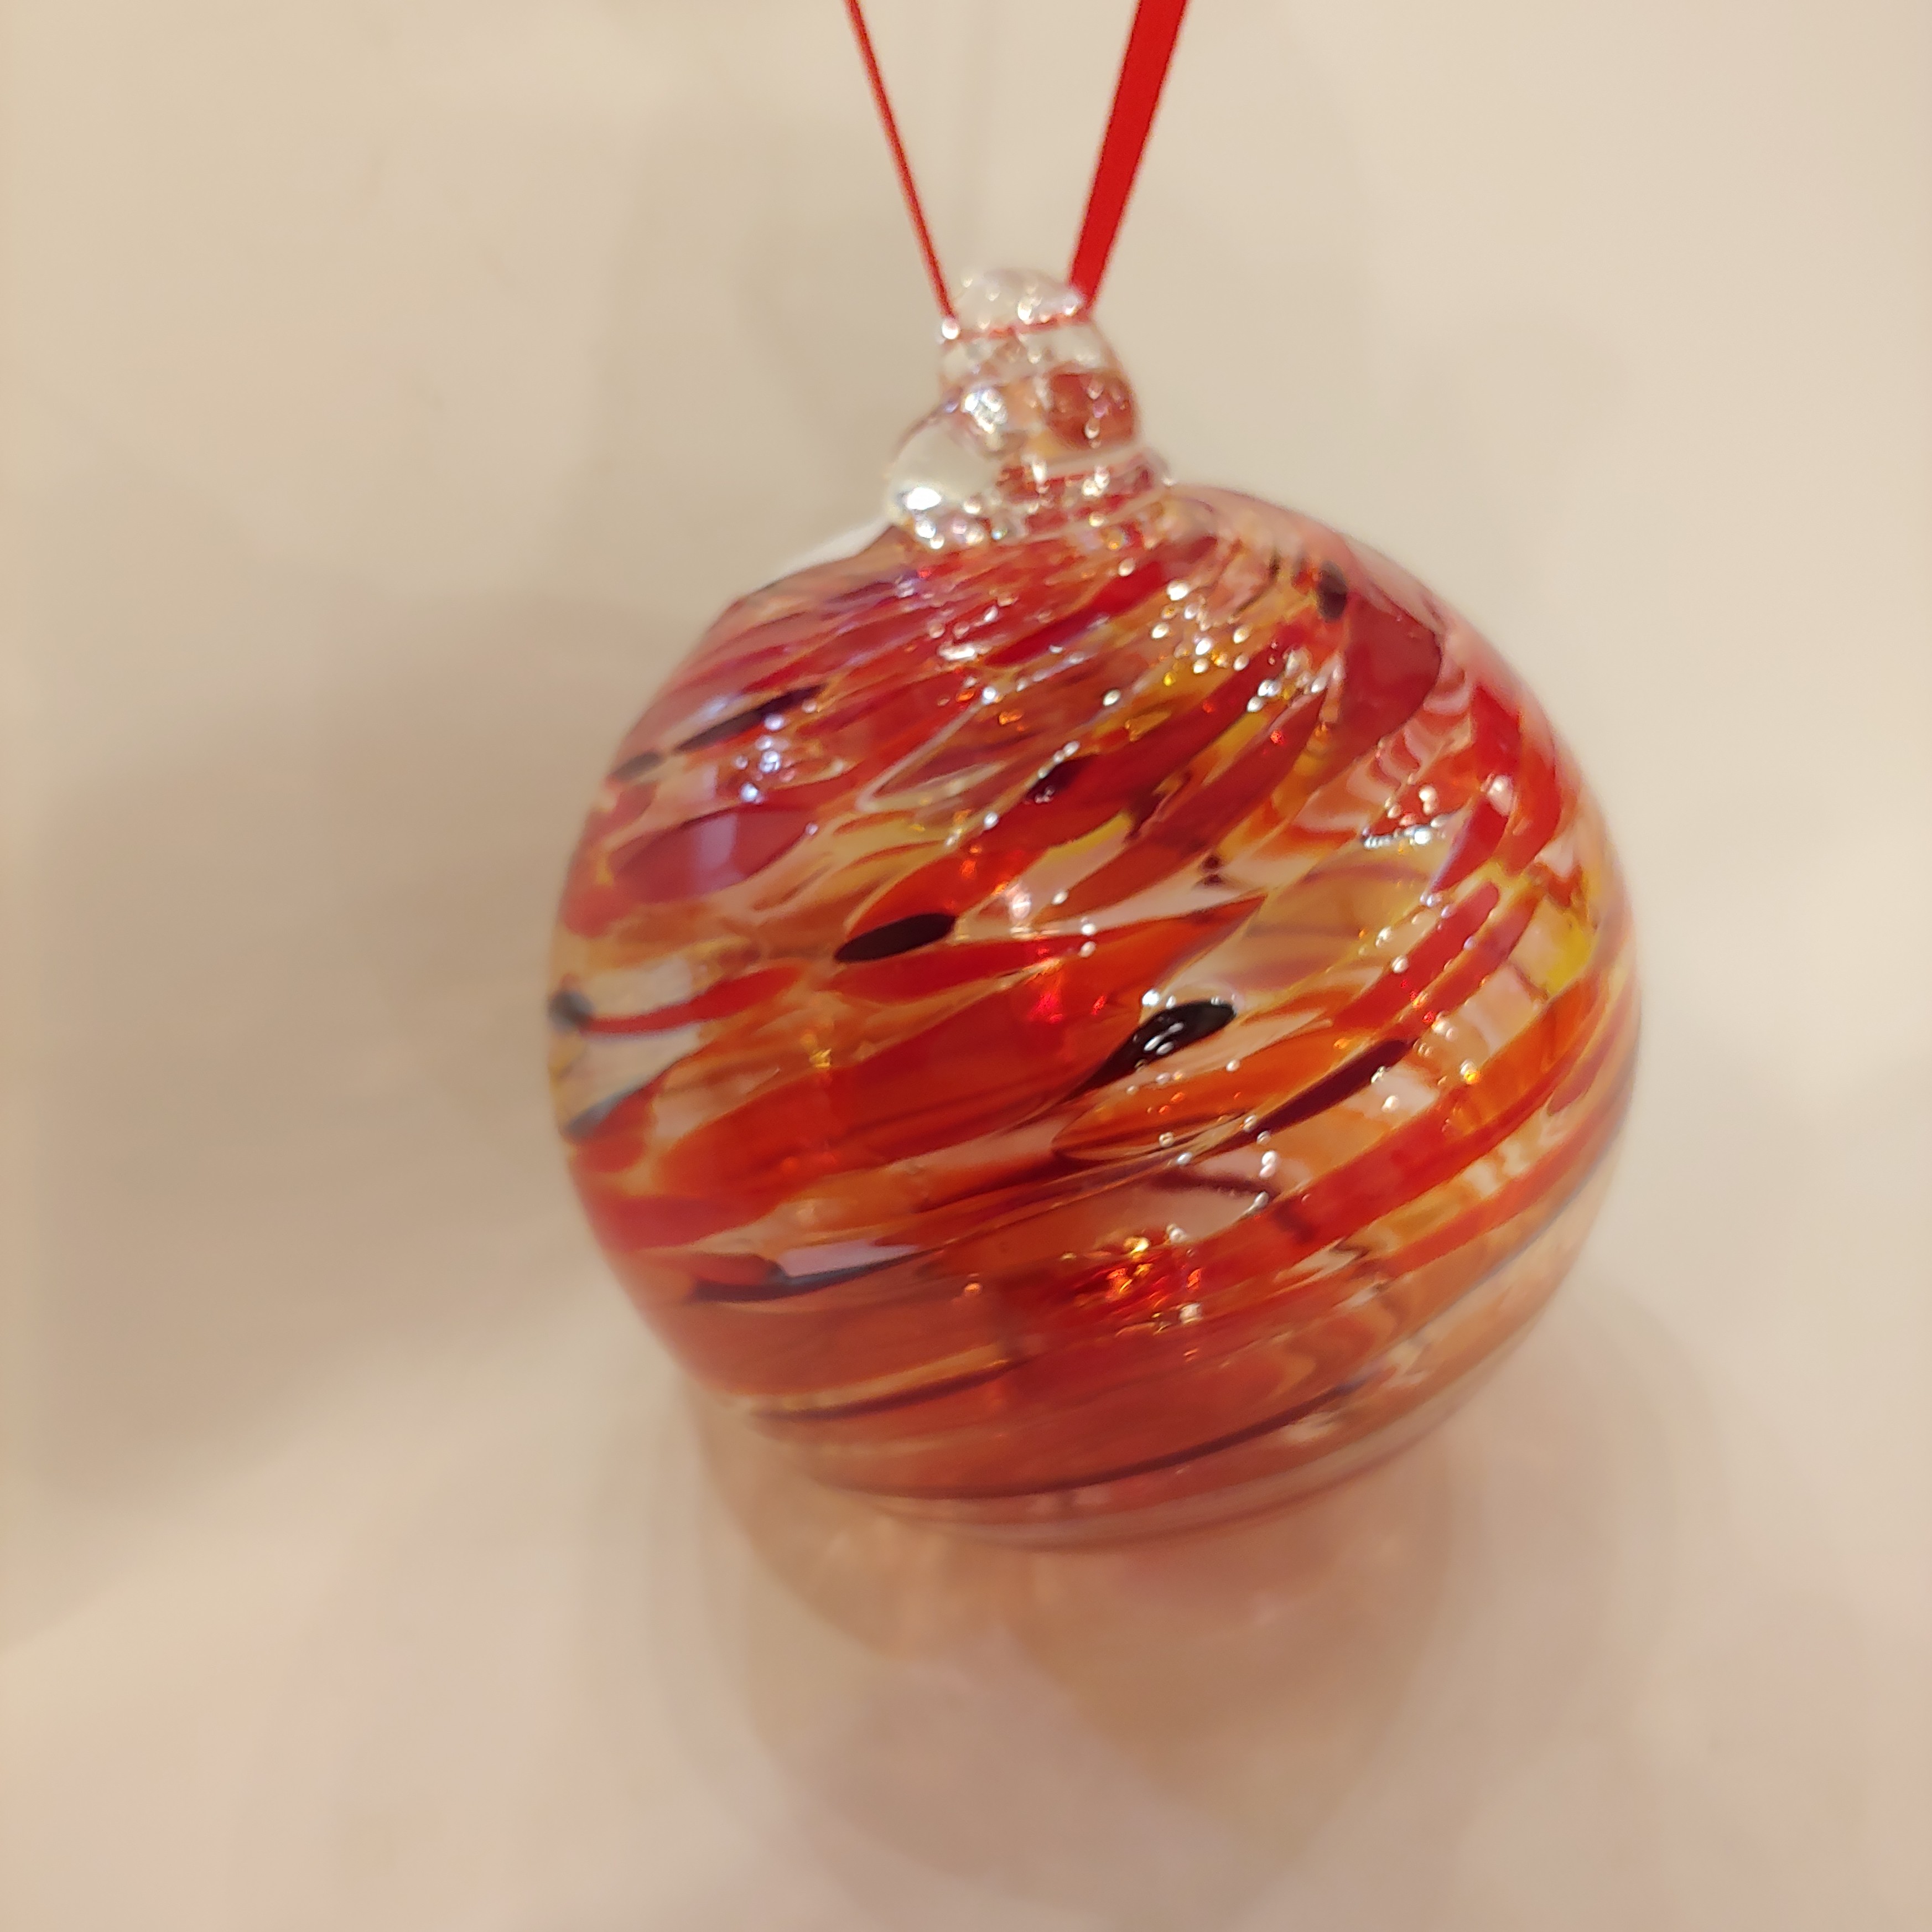 DB-825 Ornament Red Frit Twist $35 at Hunter Wolff Gallery